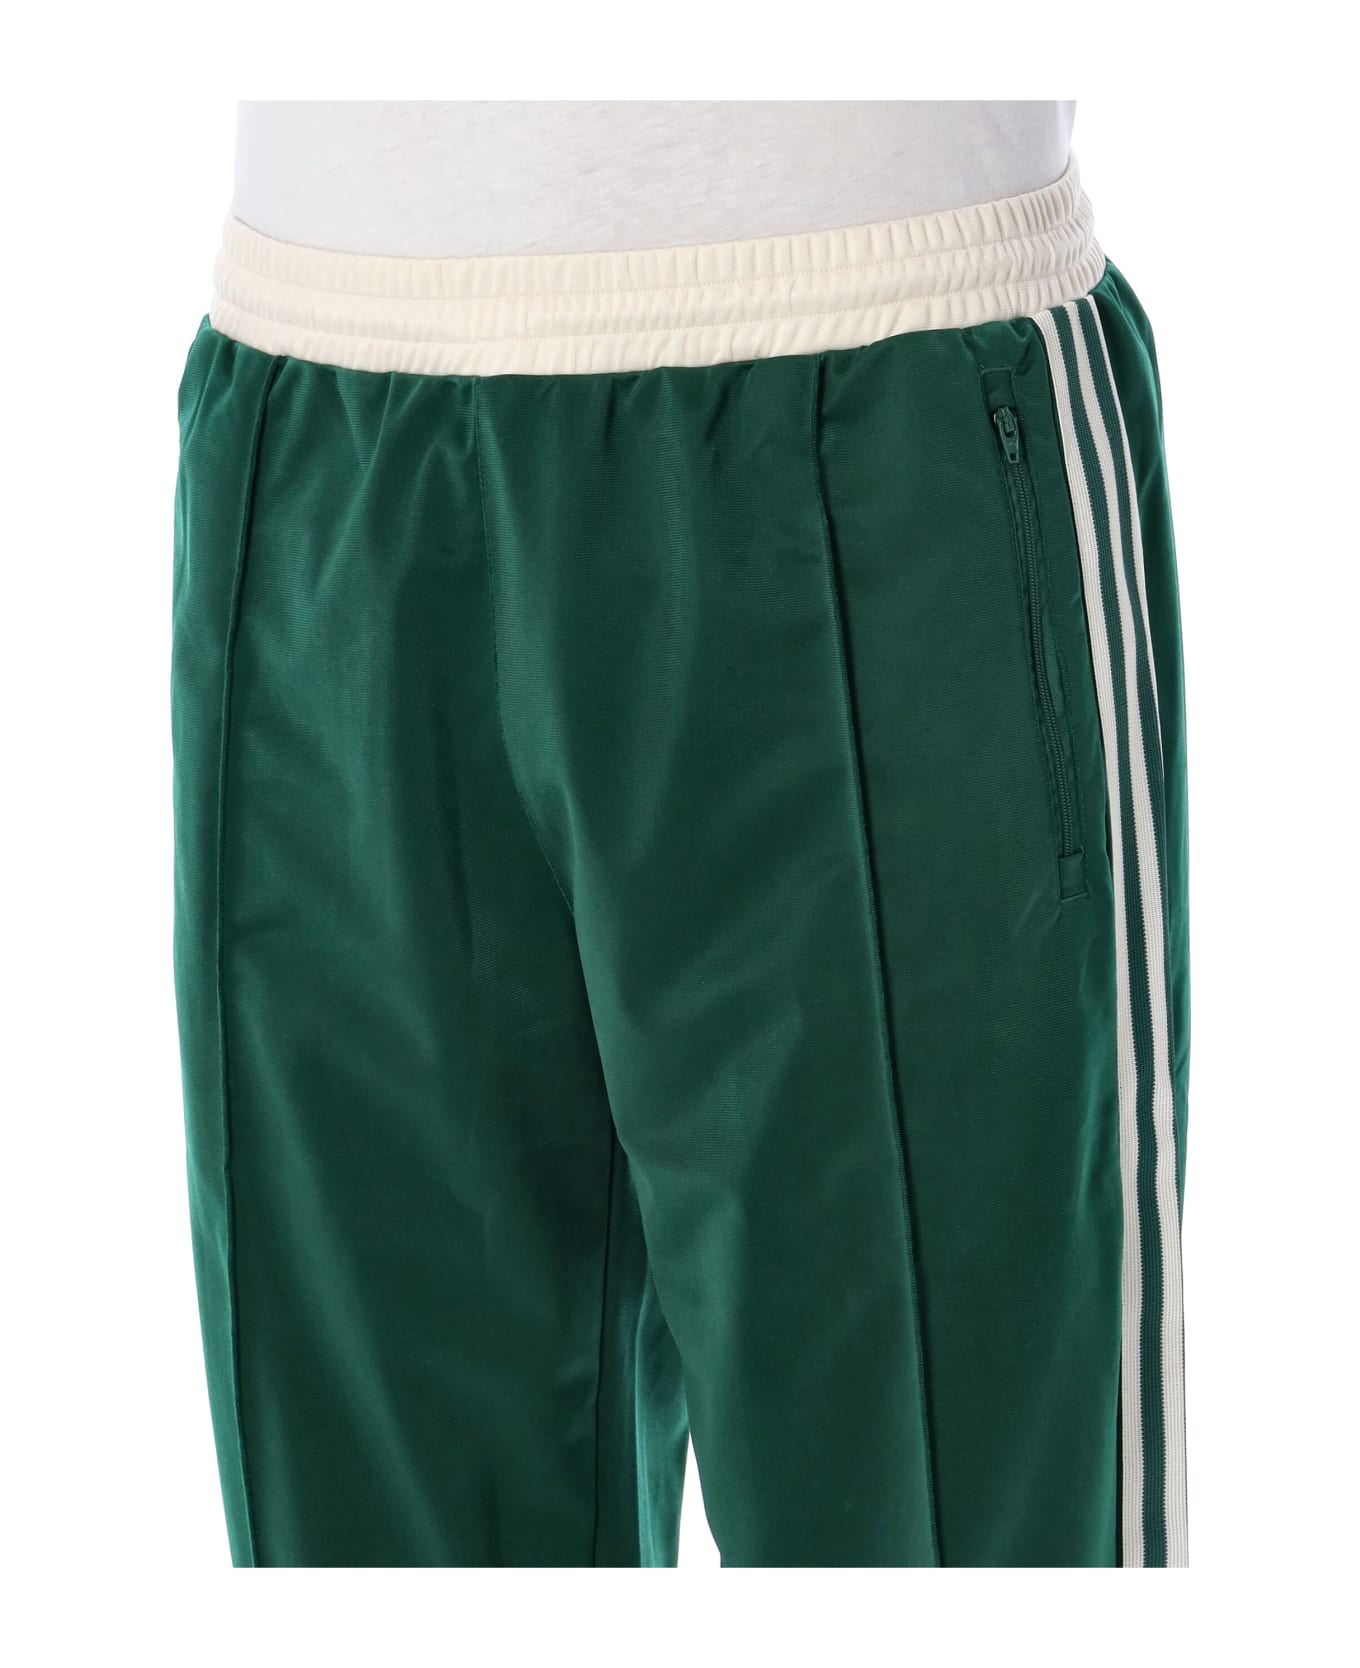 Adidas Originals Sst Track Pants - WHITE/GREEN スウェットパンツ